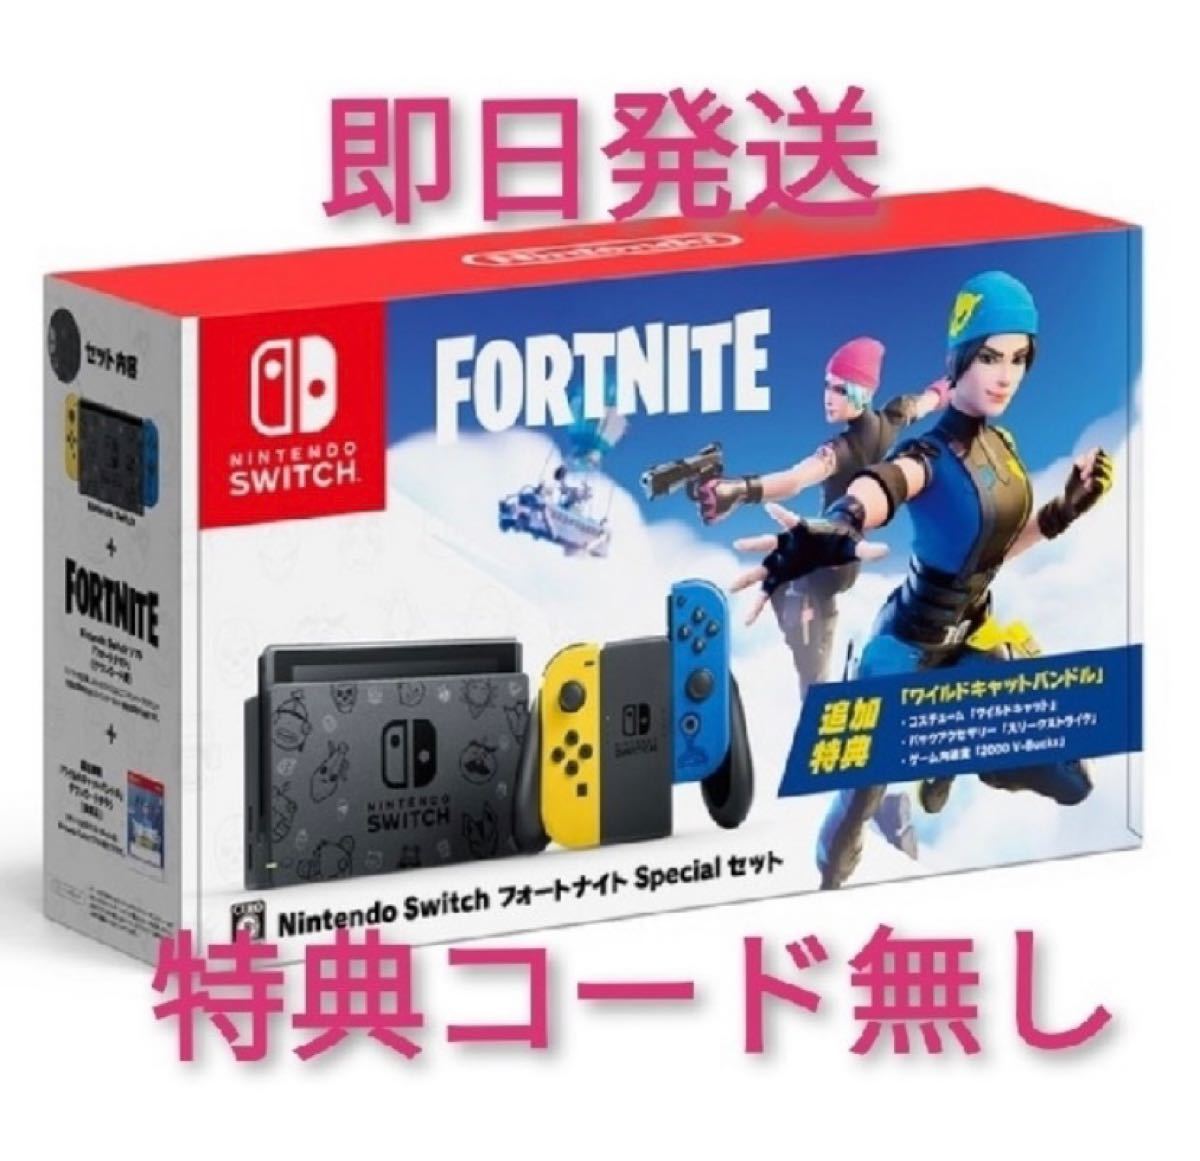 Nintendo Switch FORTNITE (フォート ナイト) Special セット 特典コードのみ無し 新品未使用